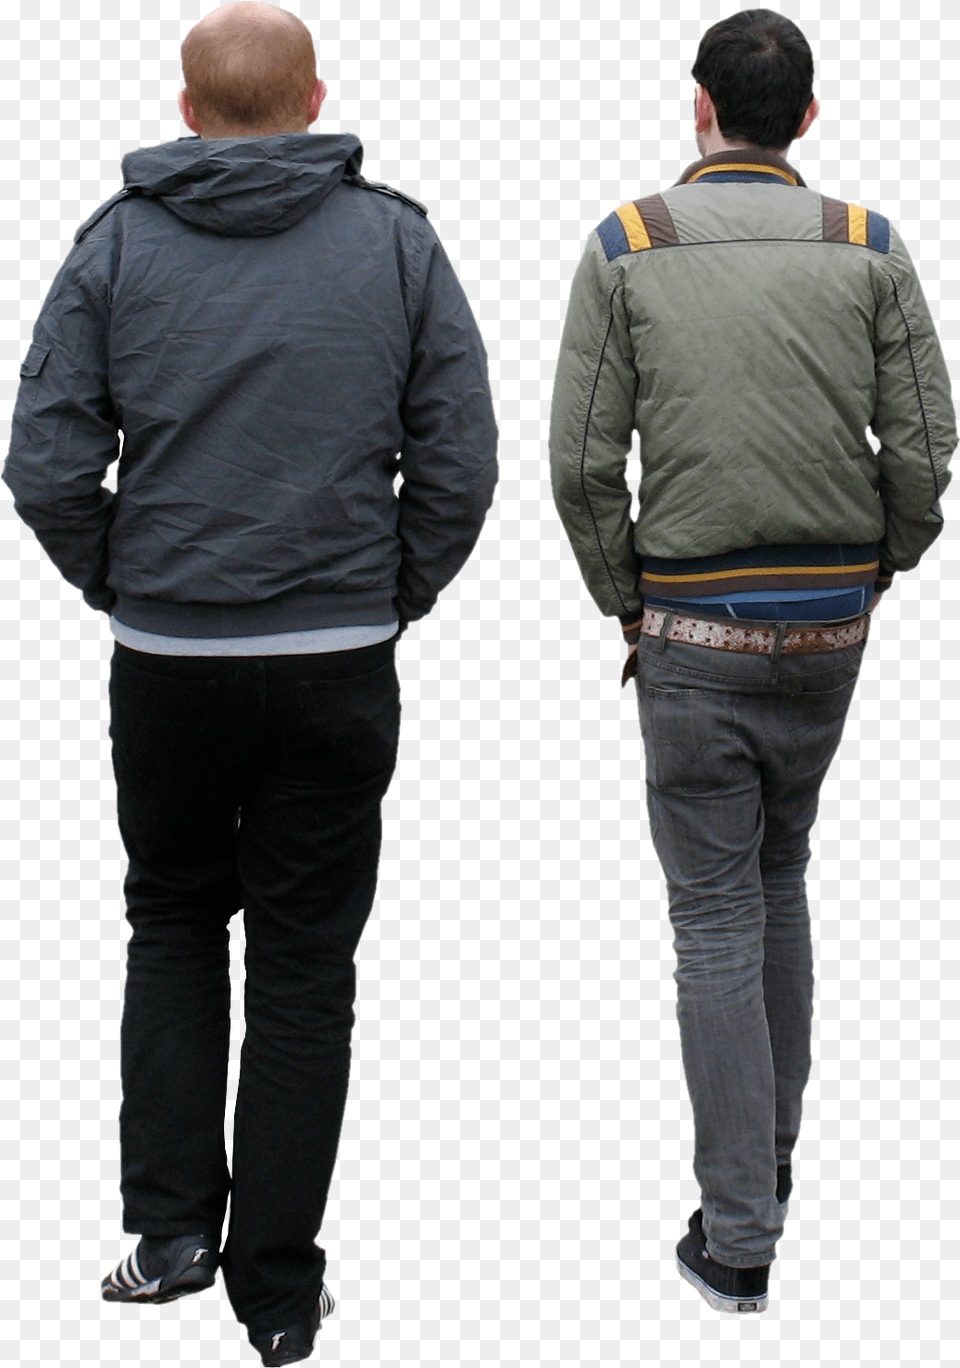 Transparent Images Pluspng People People Walking, Long Sleeve, Jeans, Jacket, Pants Png